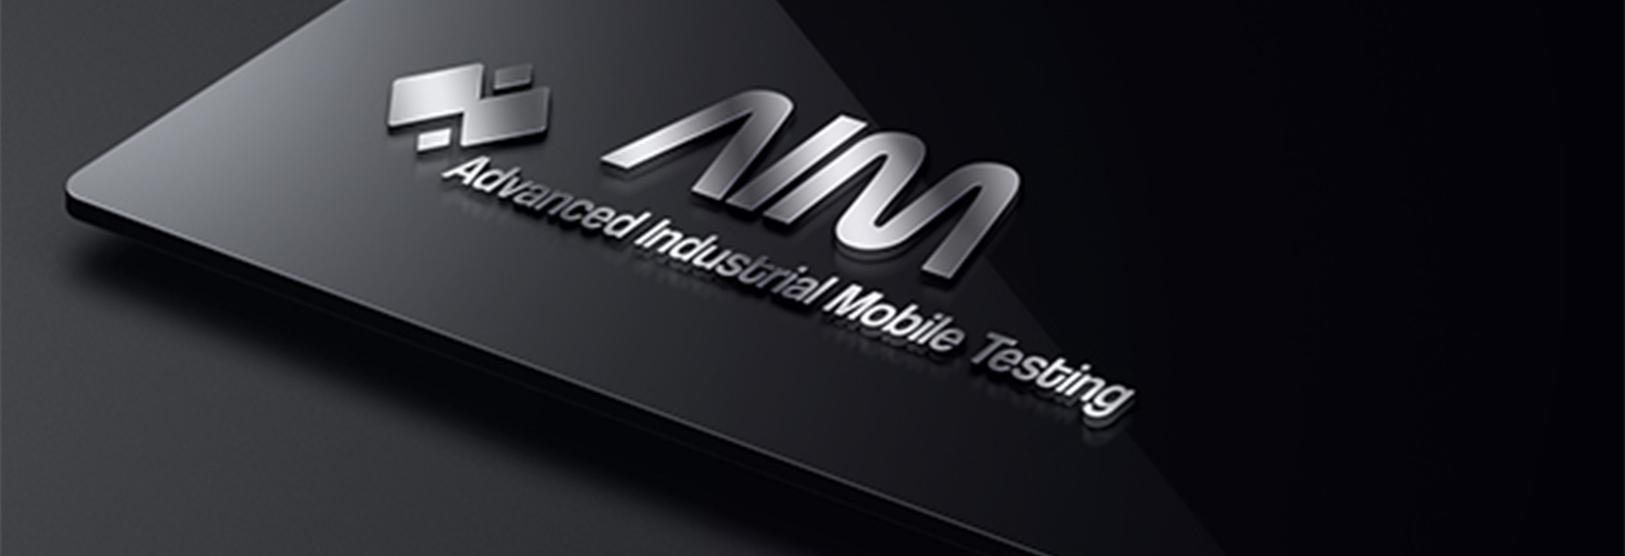 Aim Logo - Aim Logo Design Force Touches English Achieve Your Goals